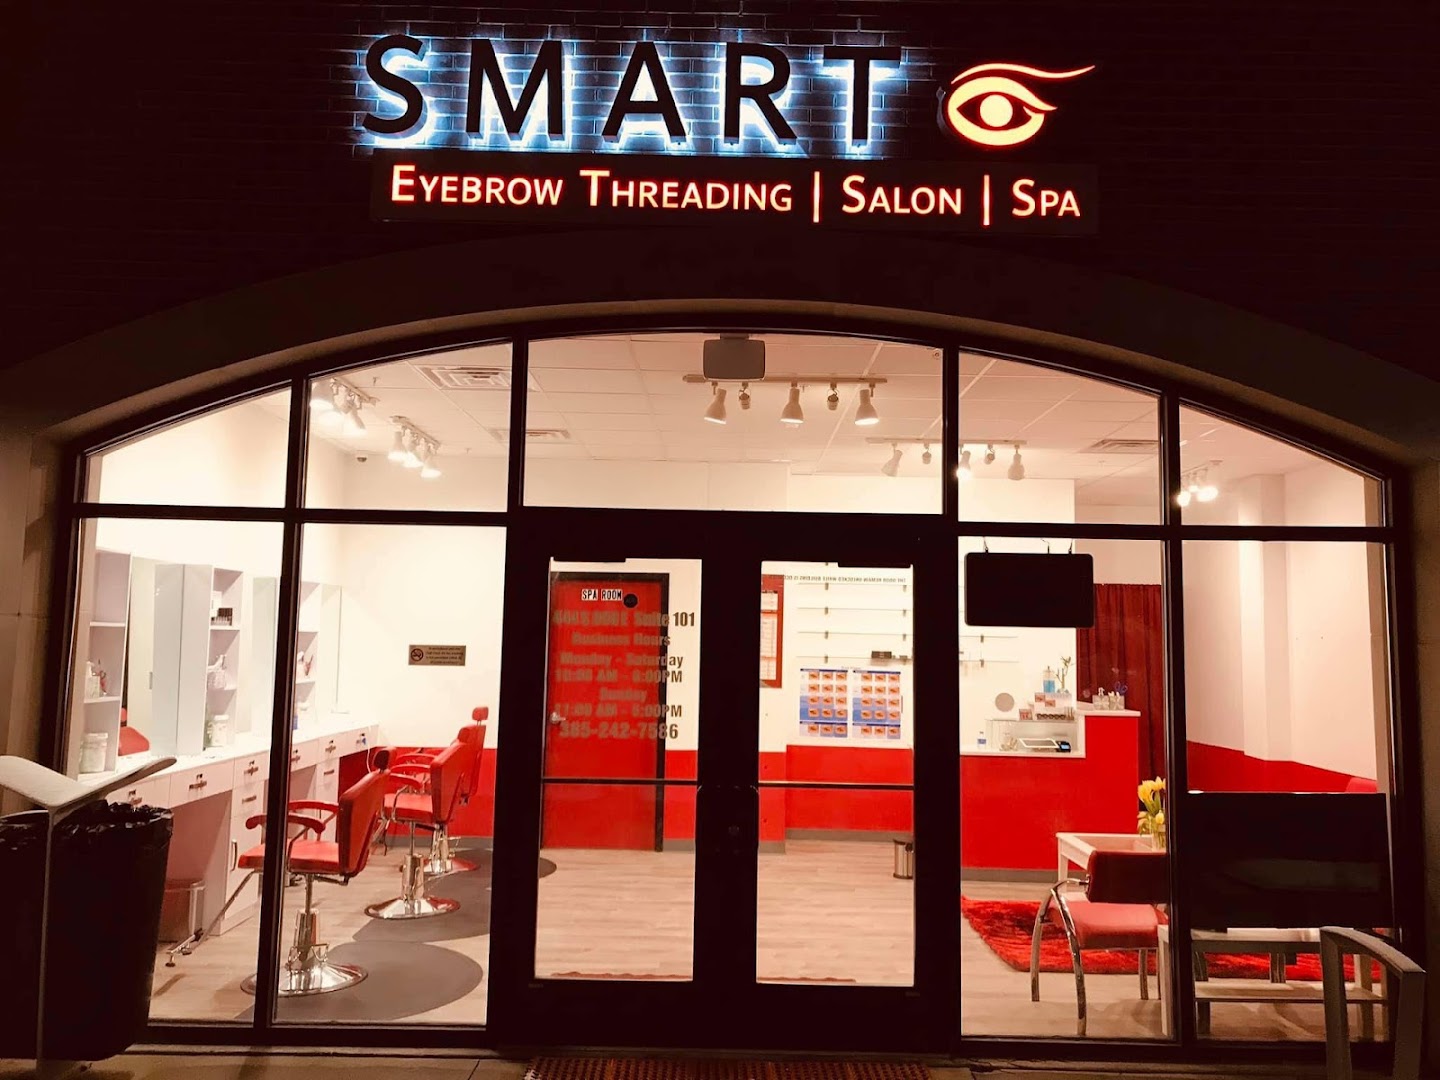 Smart Eyebrow Threading I Salon I Spa